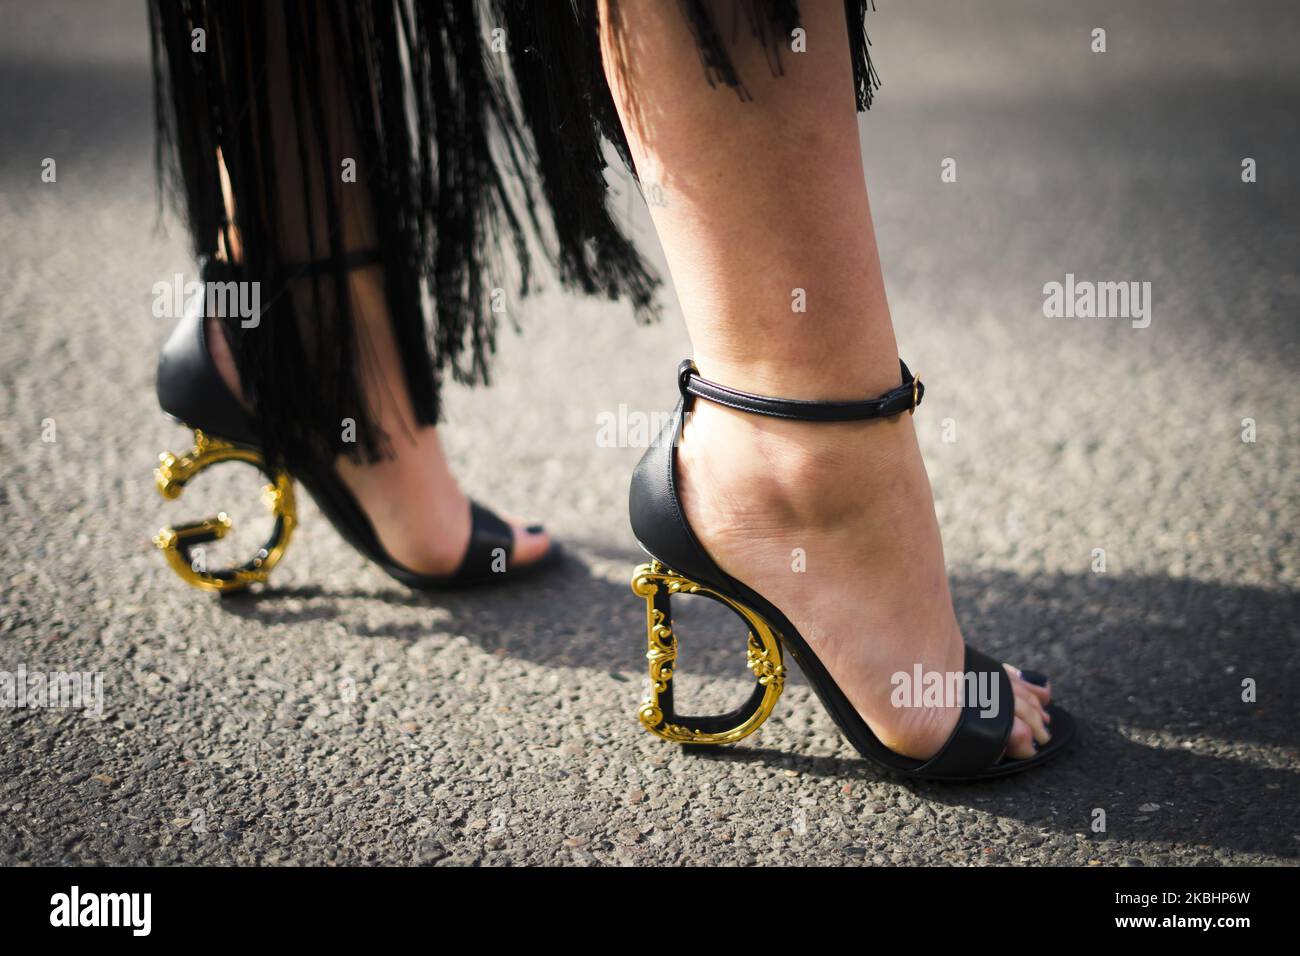 Moda de zapatos de calle fotografías e imágenes de alta resolución - Página  5 - Alamy